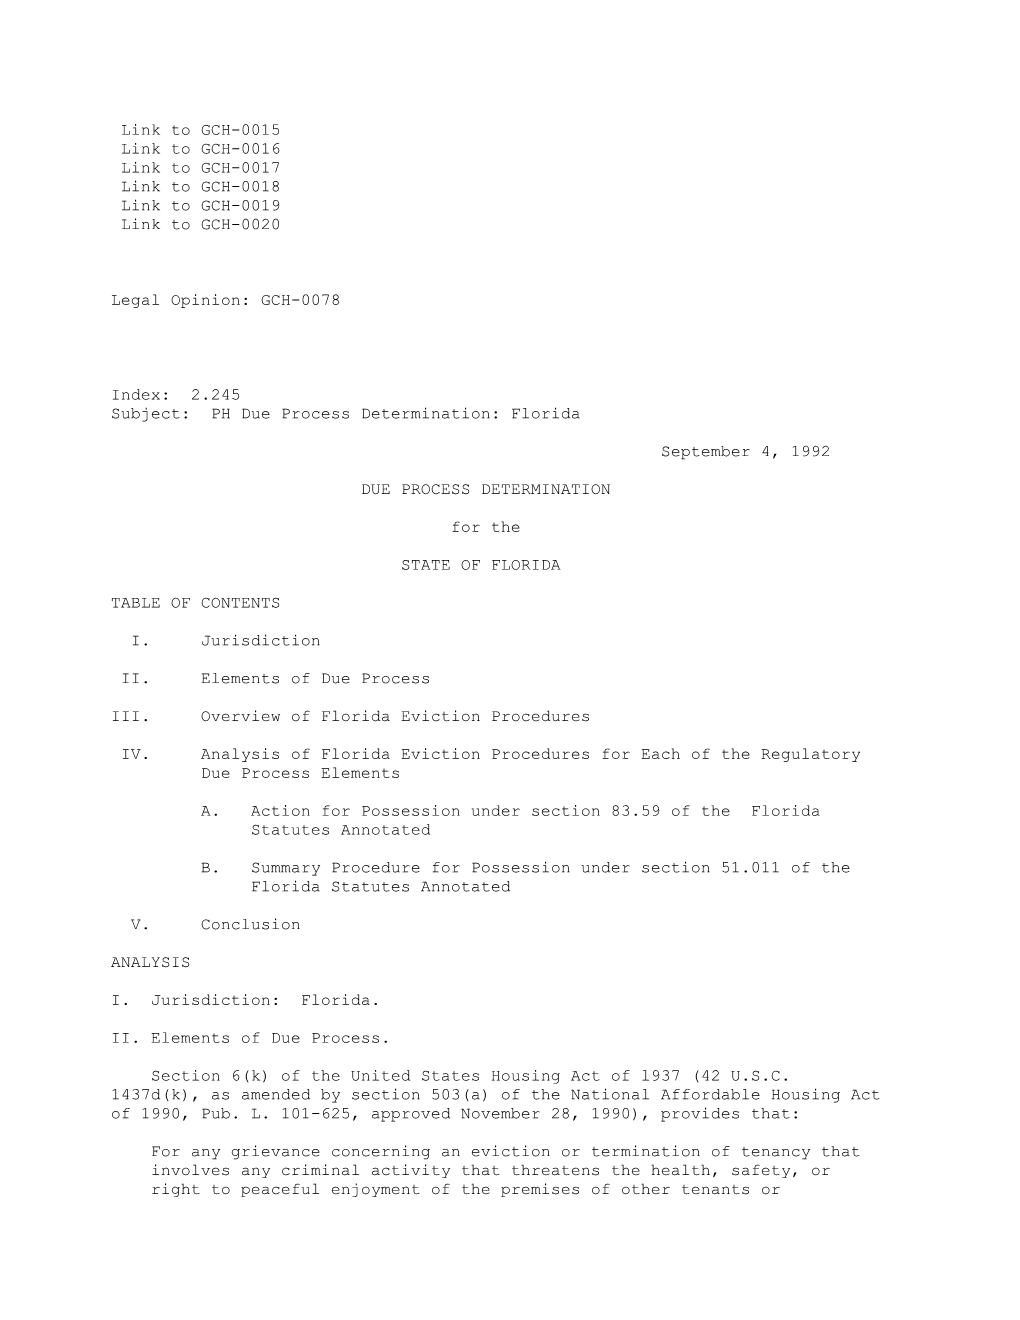 Subject: PH Due Process Determination: Florida